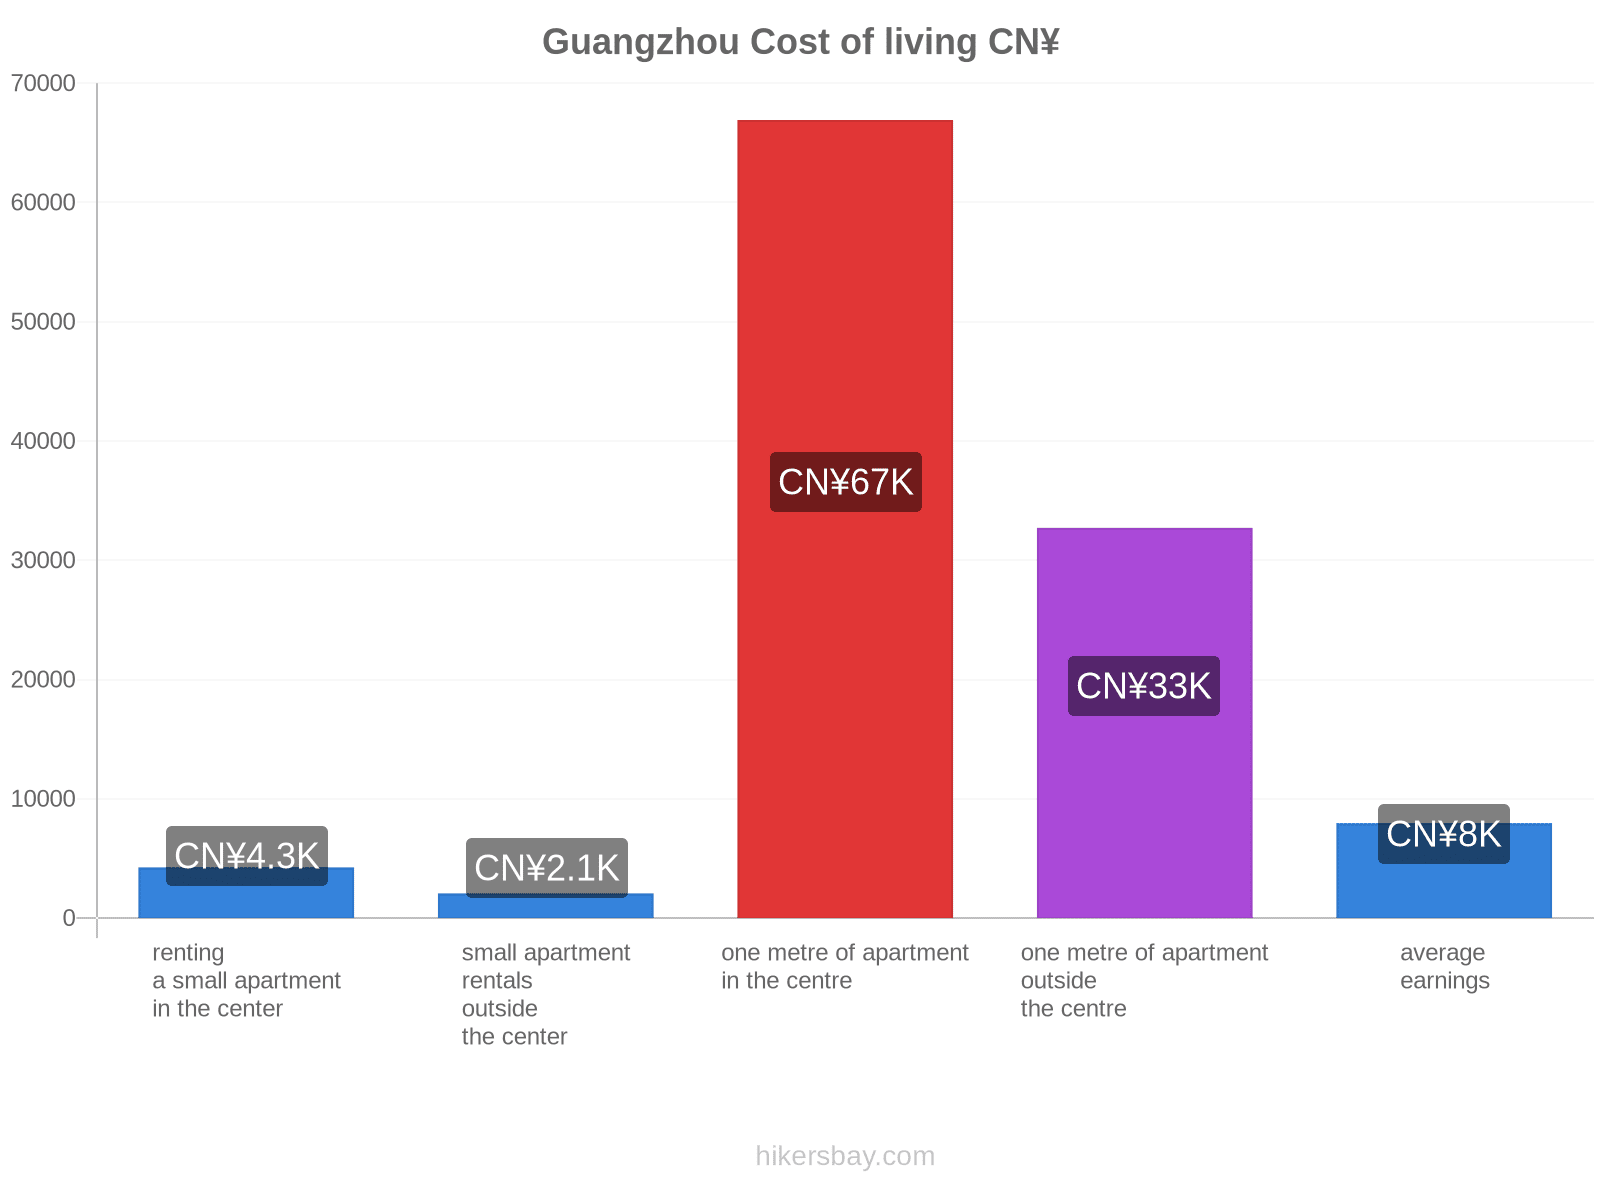 Guangzhou cost of living hikersbay.com